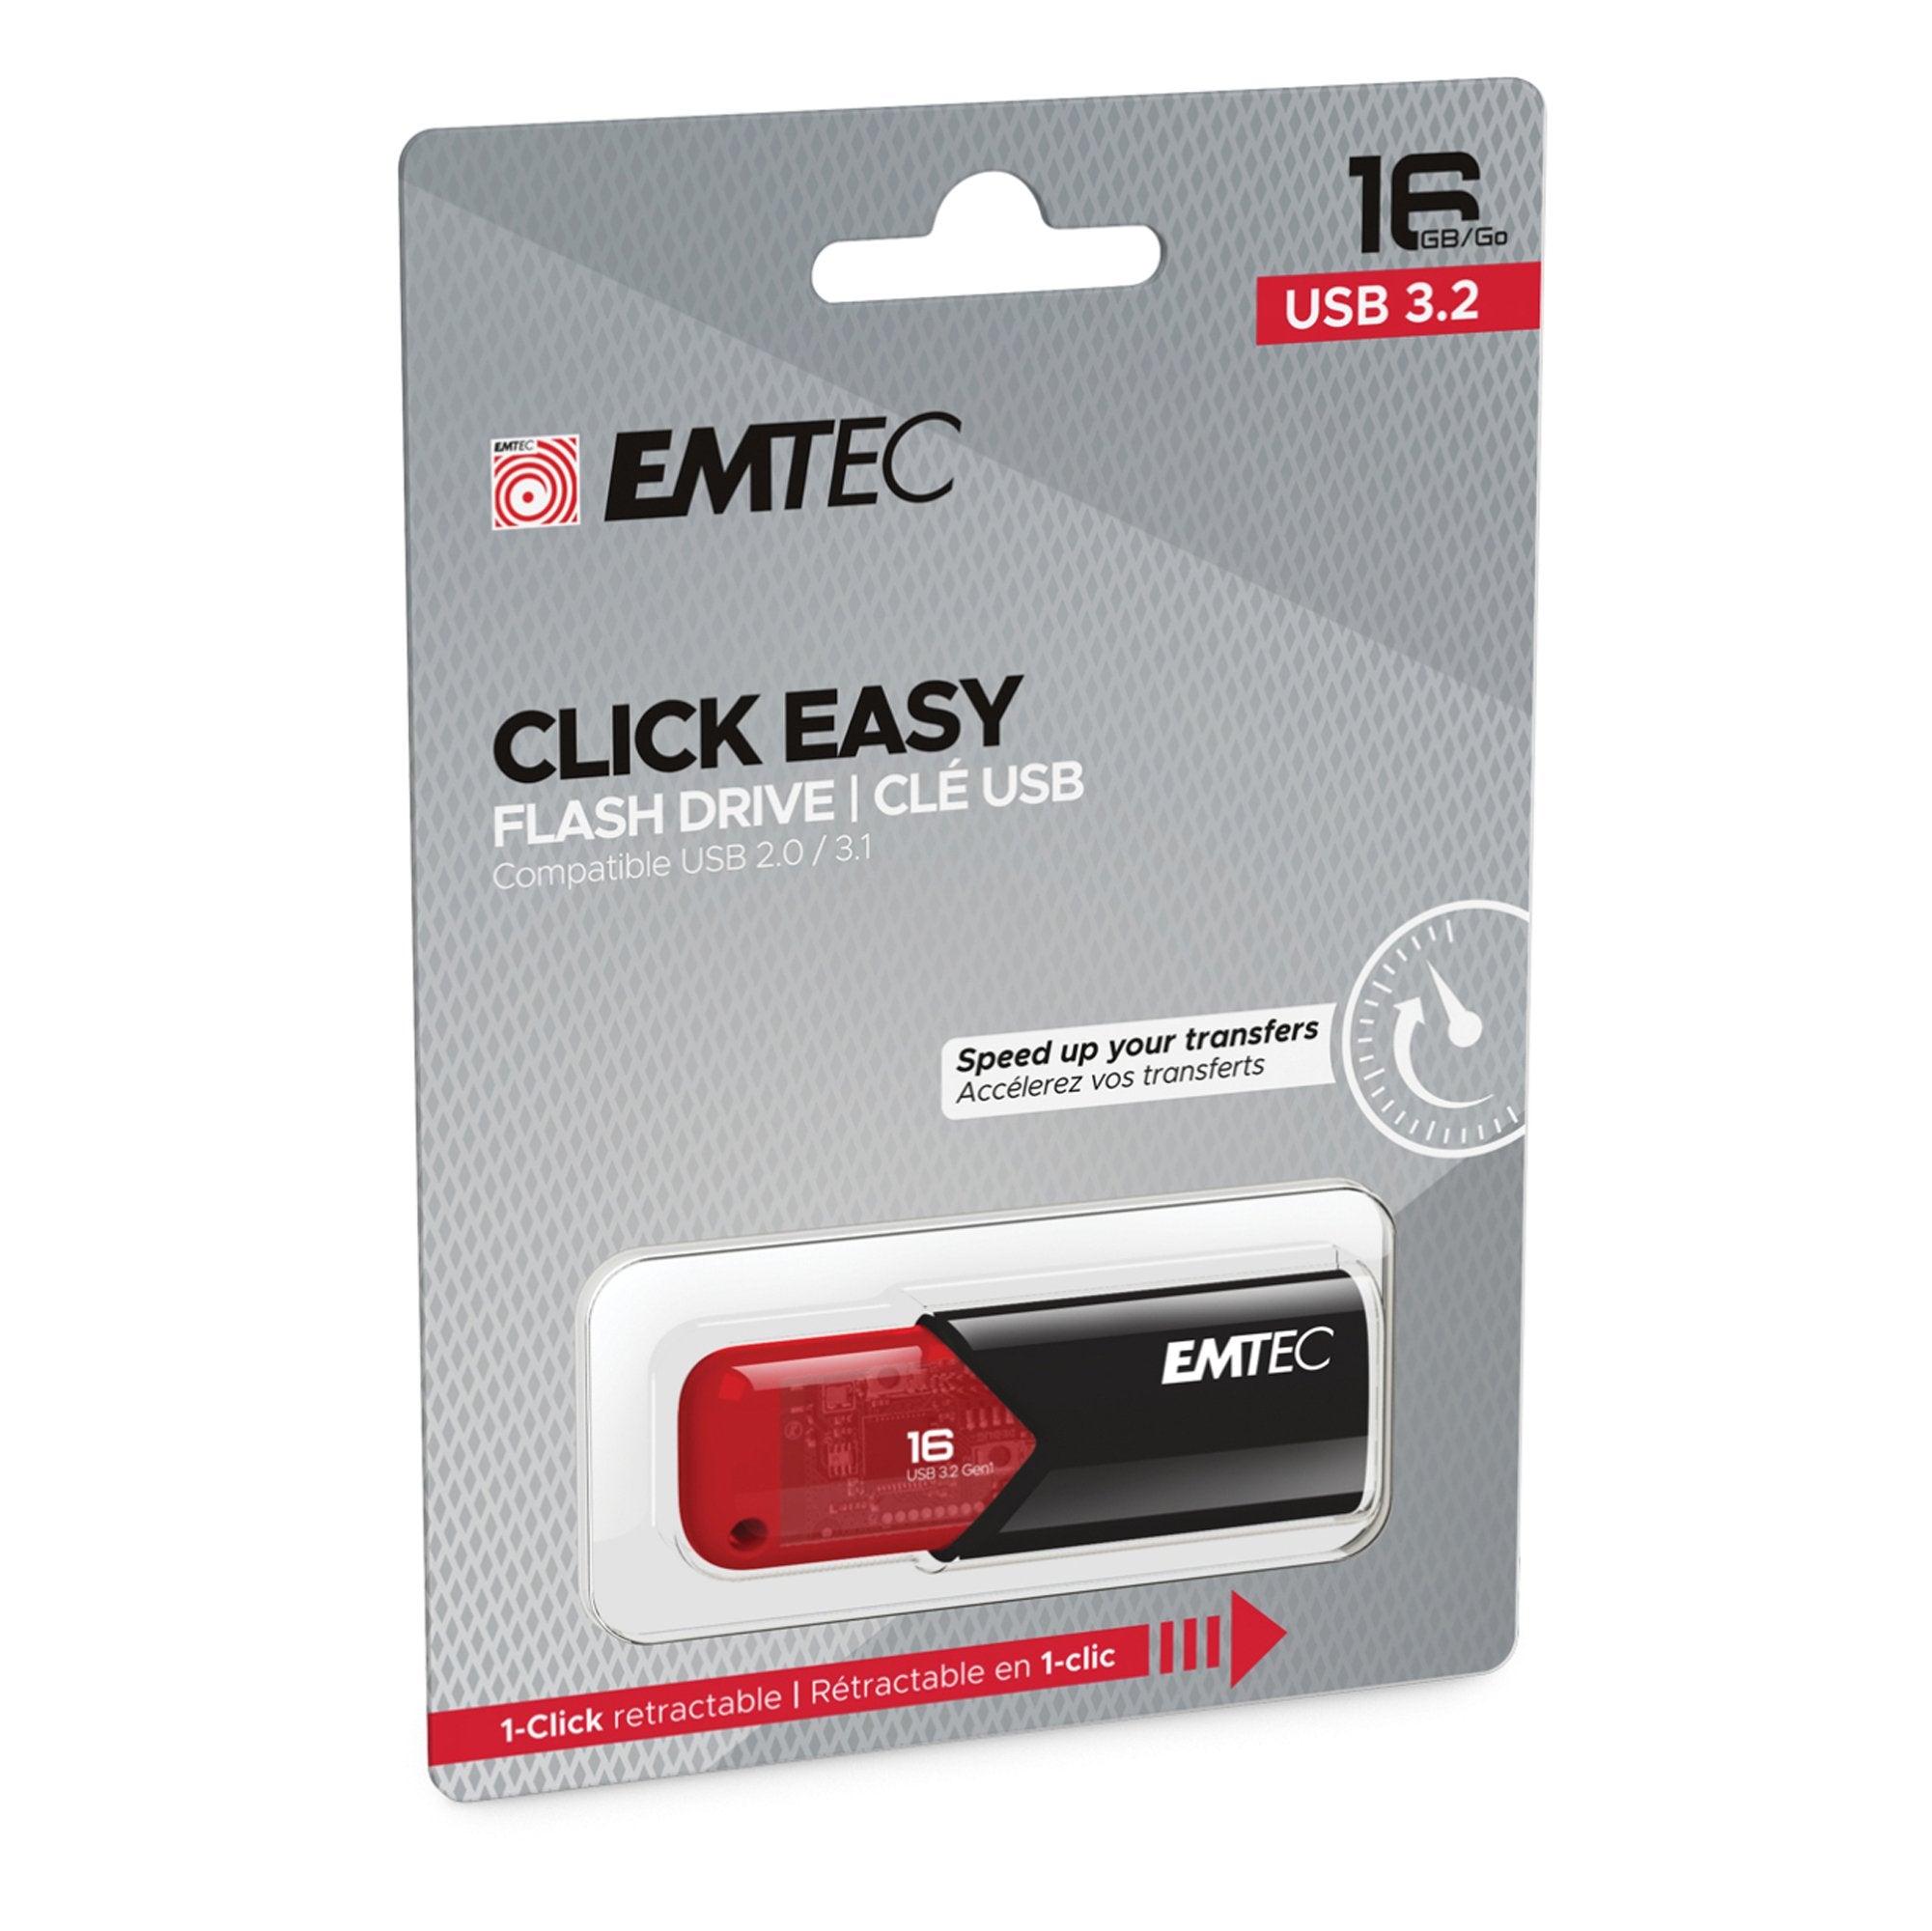 emtec-memoria-usb-b110-usb3-2-clickeasy-16gb-rossa